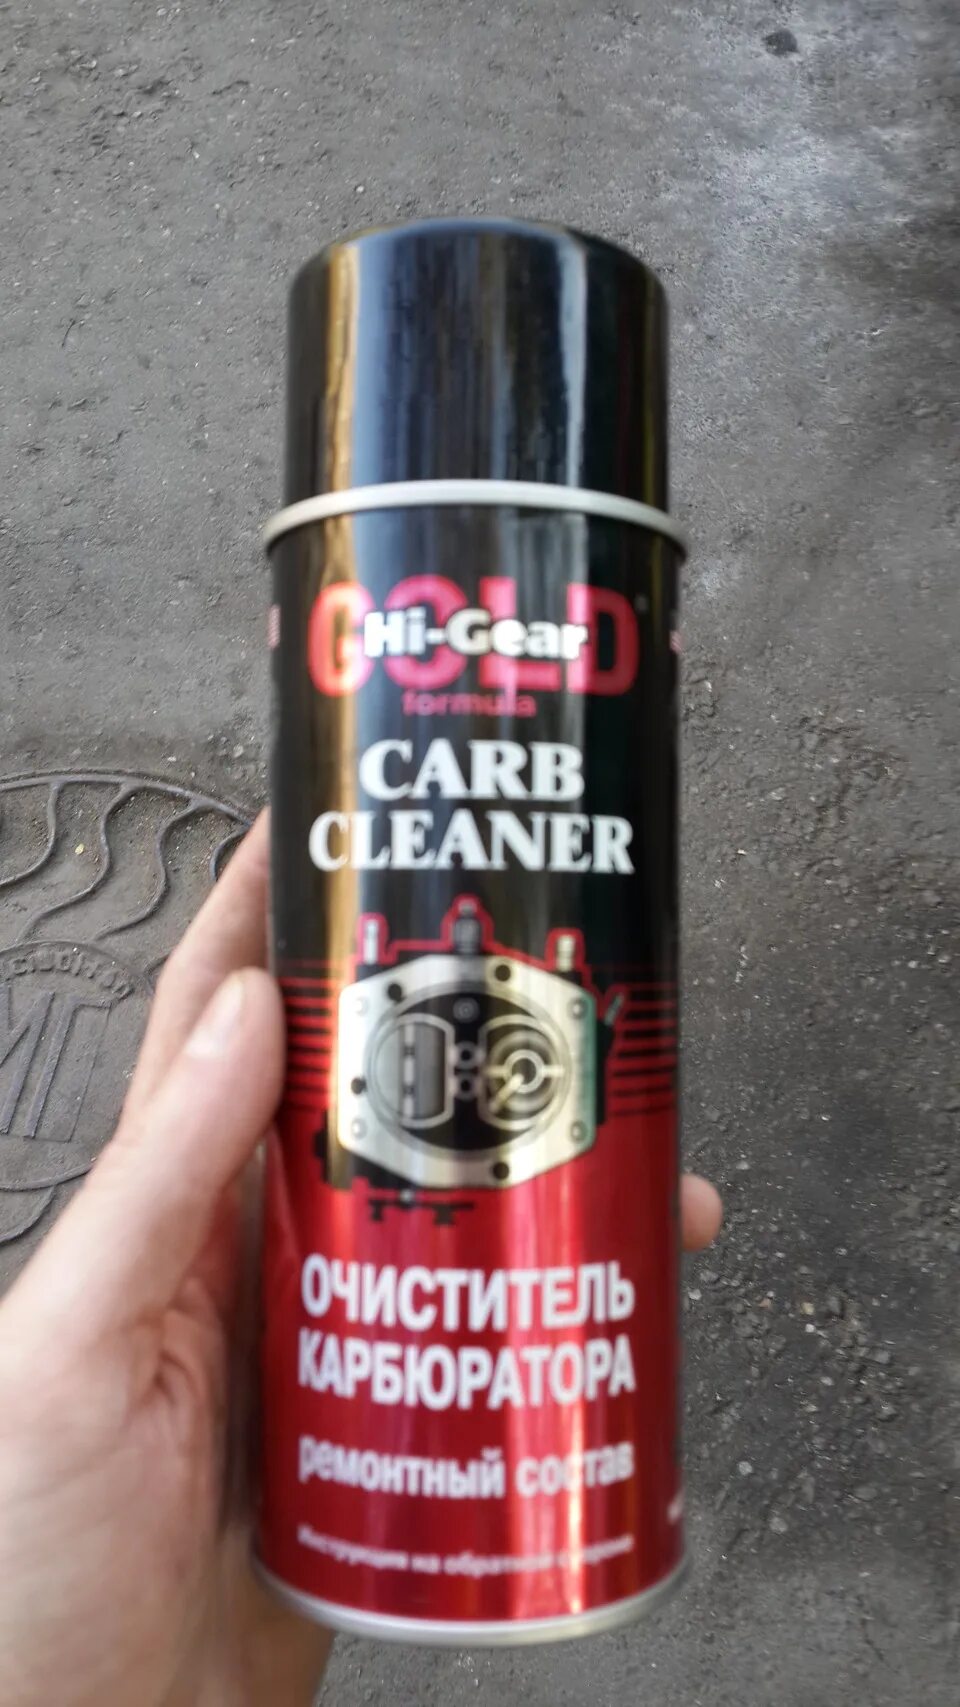 Carb clean. Hi Gear Carb Cleaner. Carb Cleaner очиститель кузов. Очиститель biaobang Carb Cleaner. Carb Cleaner желтый баллон.